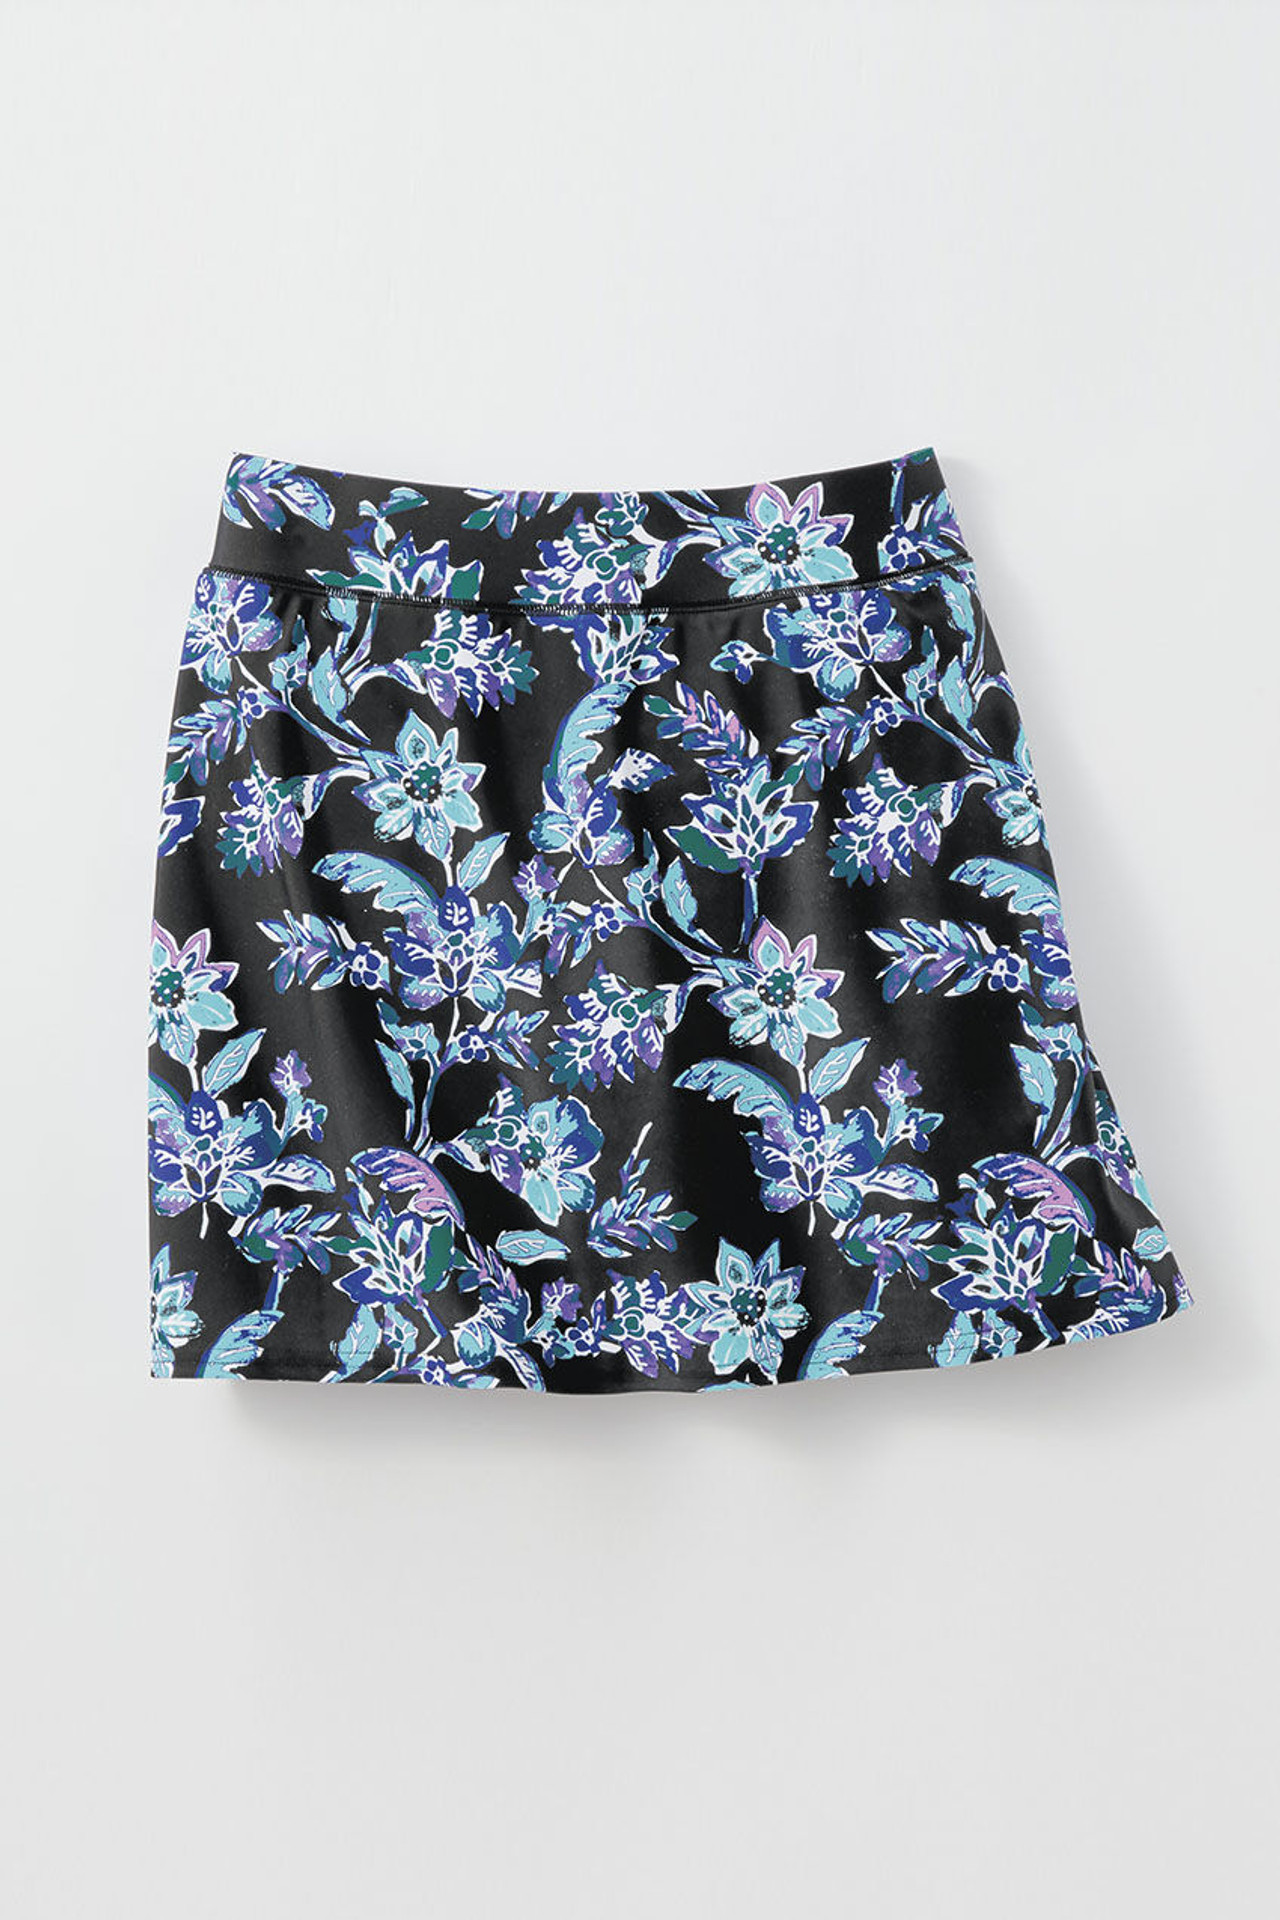 Wild Floral ShapeMe™ Swim Skirt